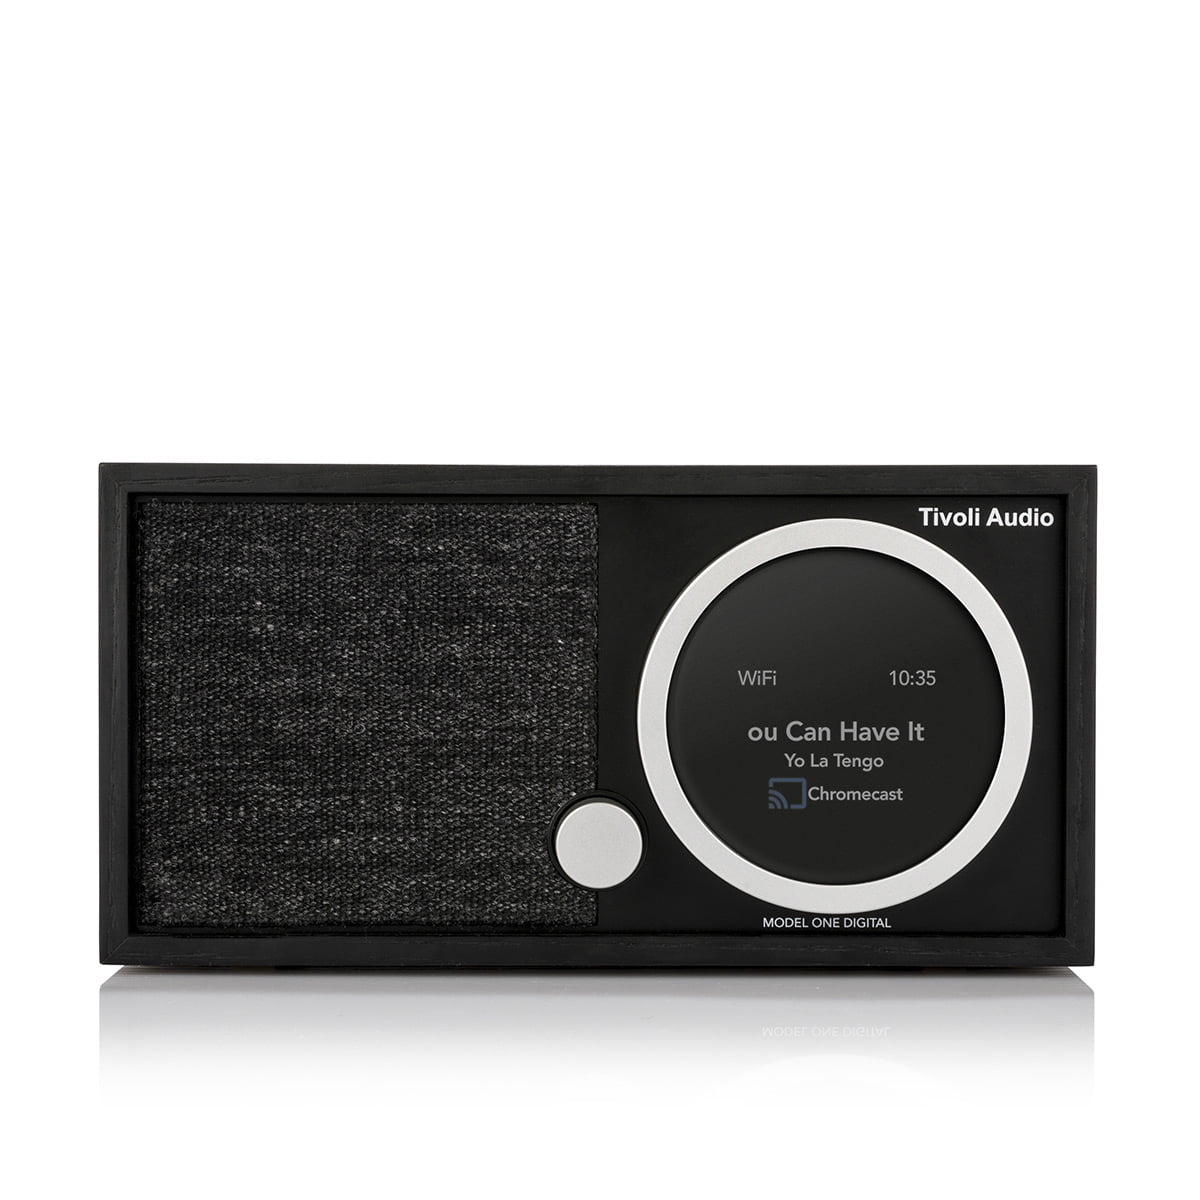 Tivoli Audio Art Modelo Uno AM FM RADIO DAB Digital Wi-Fi Bluetooth negro 